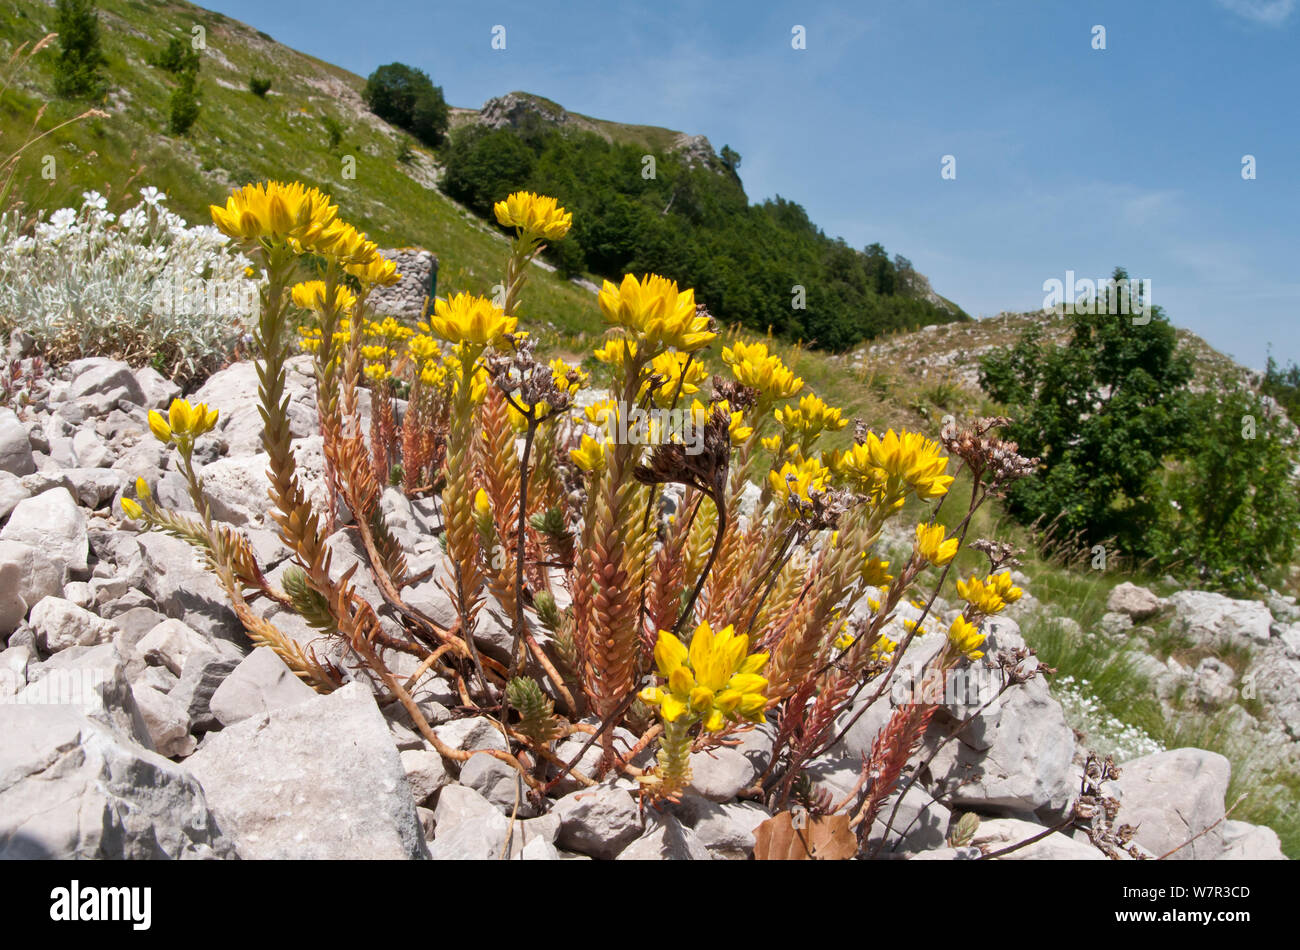 Rock stonecrop (Sedum rupestre) in flower, Mount Terminillo, Rieti, Lazio, Italy Stock Photo